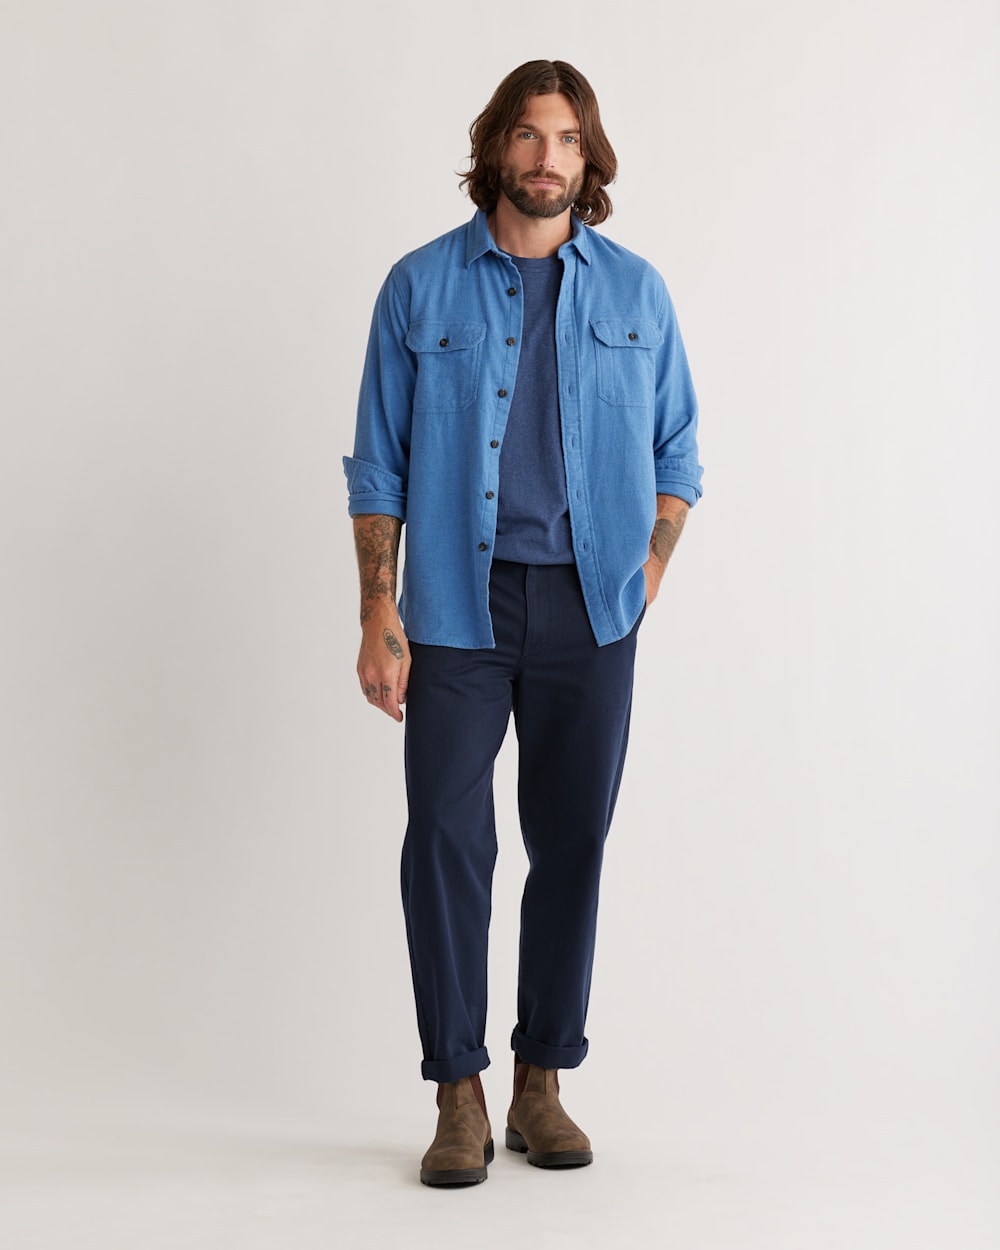 Men's Double-Brushed Flannel Shirt Jacket, Men's Apparel